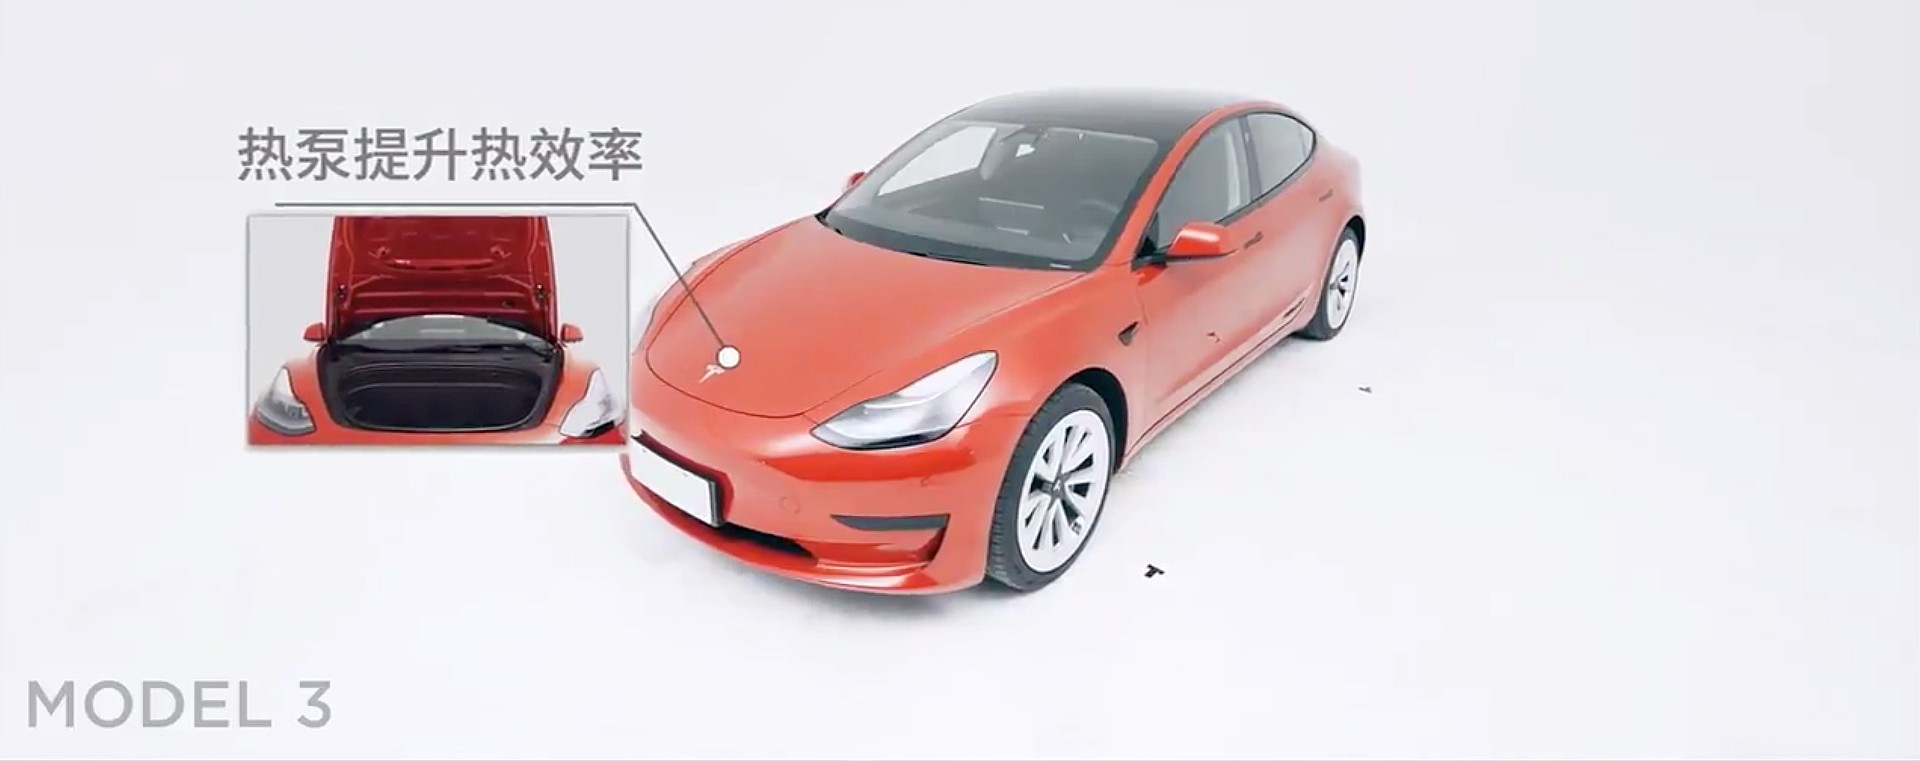 Tesla China активизирует маркетинг Model 3 по мере роста конкуренции